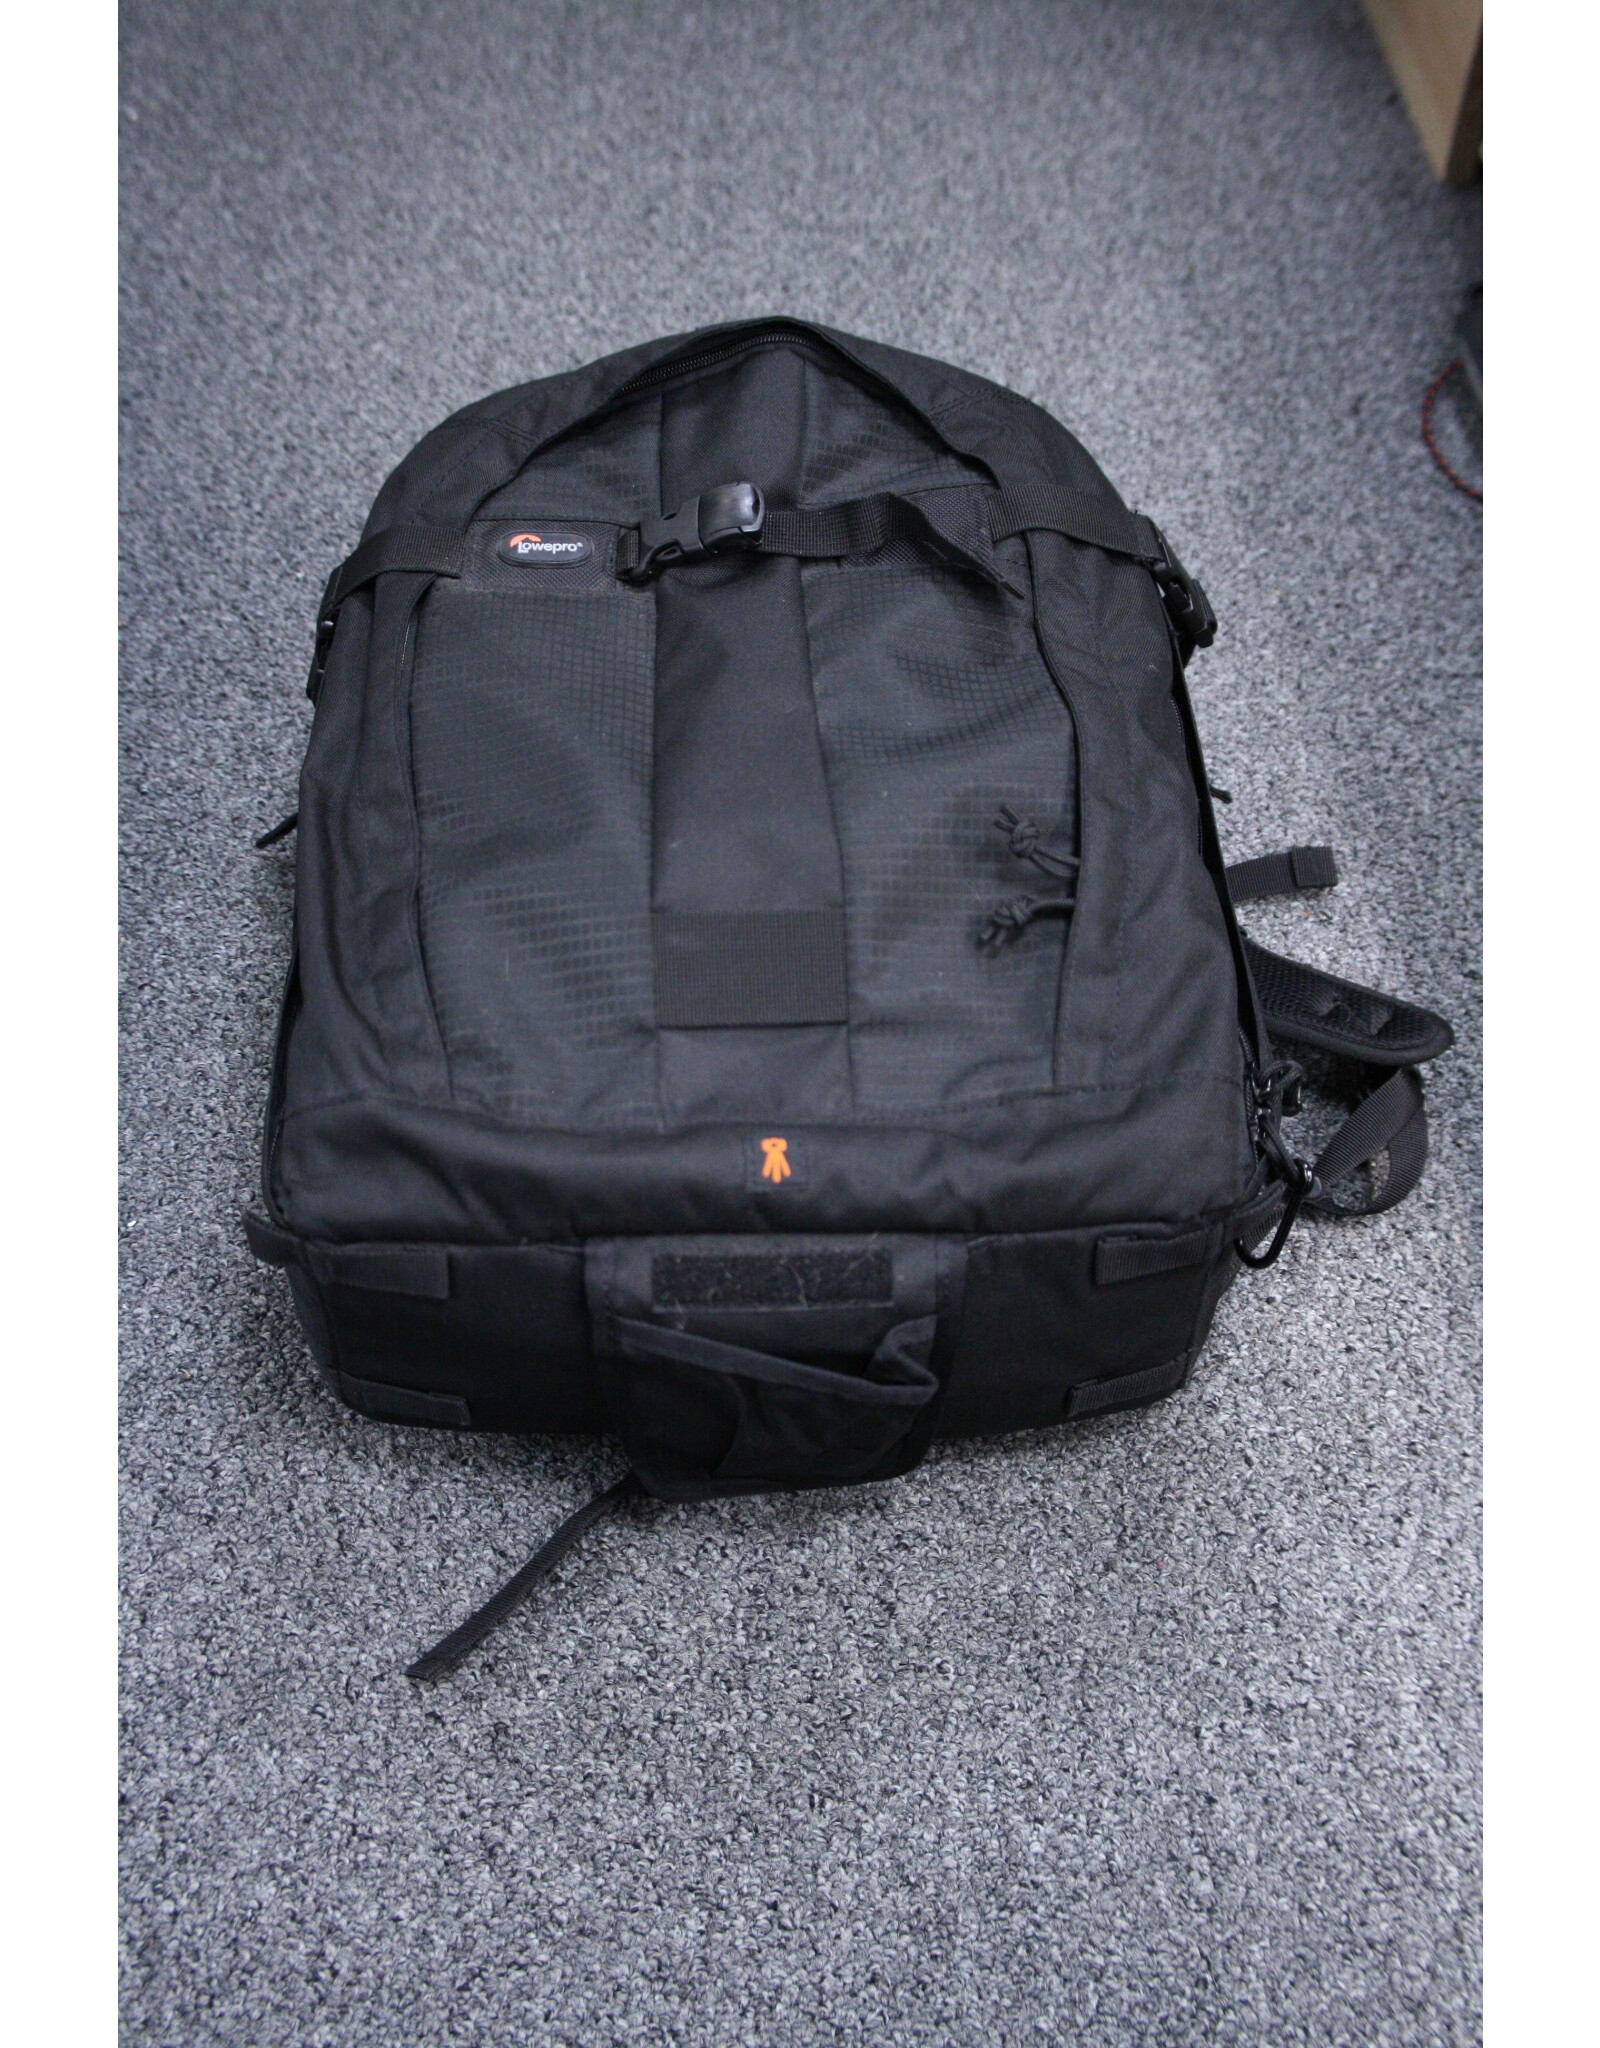 LowePro LowePro Deluxe  Backpack (Pre-owned)